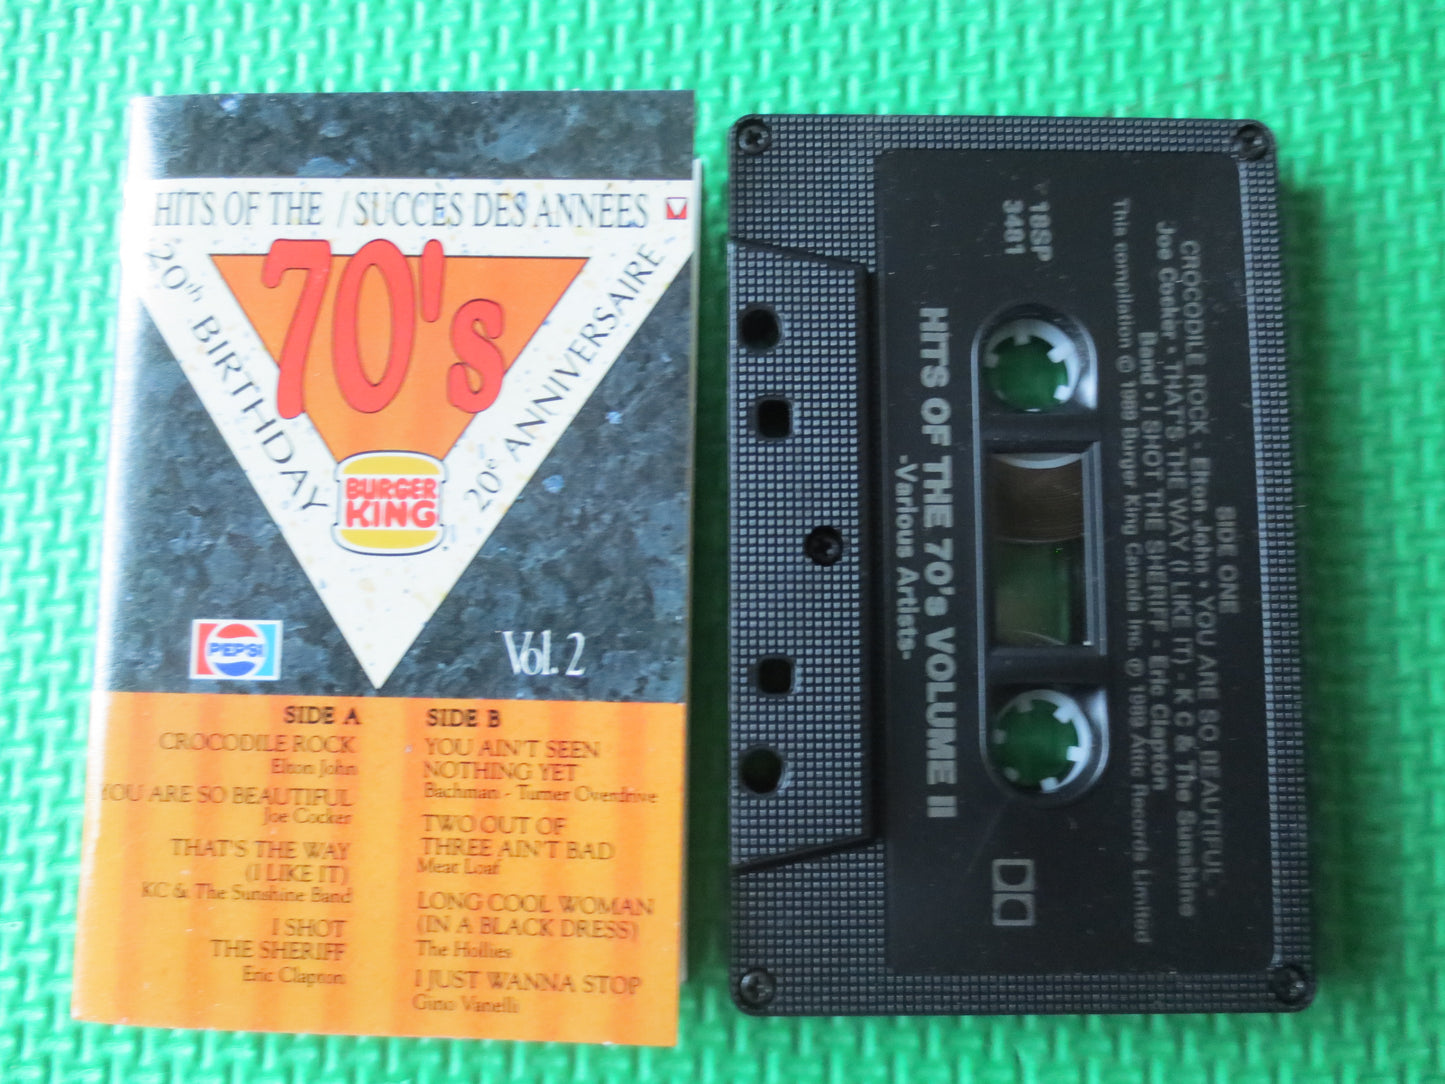 BURGER KING, HITS of the 70's, Volume 2, Tape Cassette, Pop Music Cassette, Music Tape, Culture Club Tape, 1989 Cassette